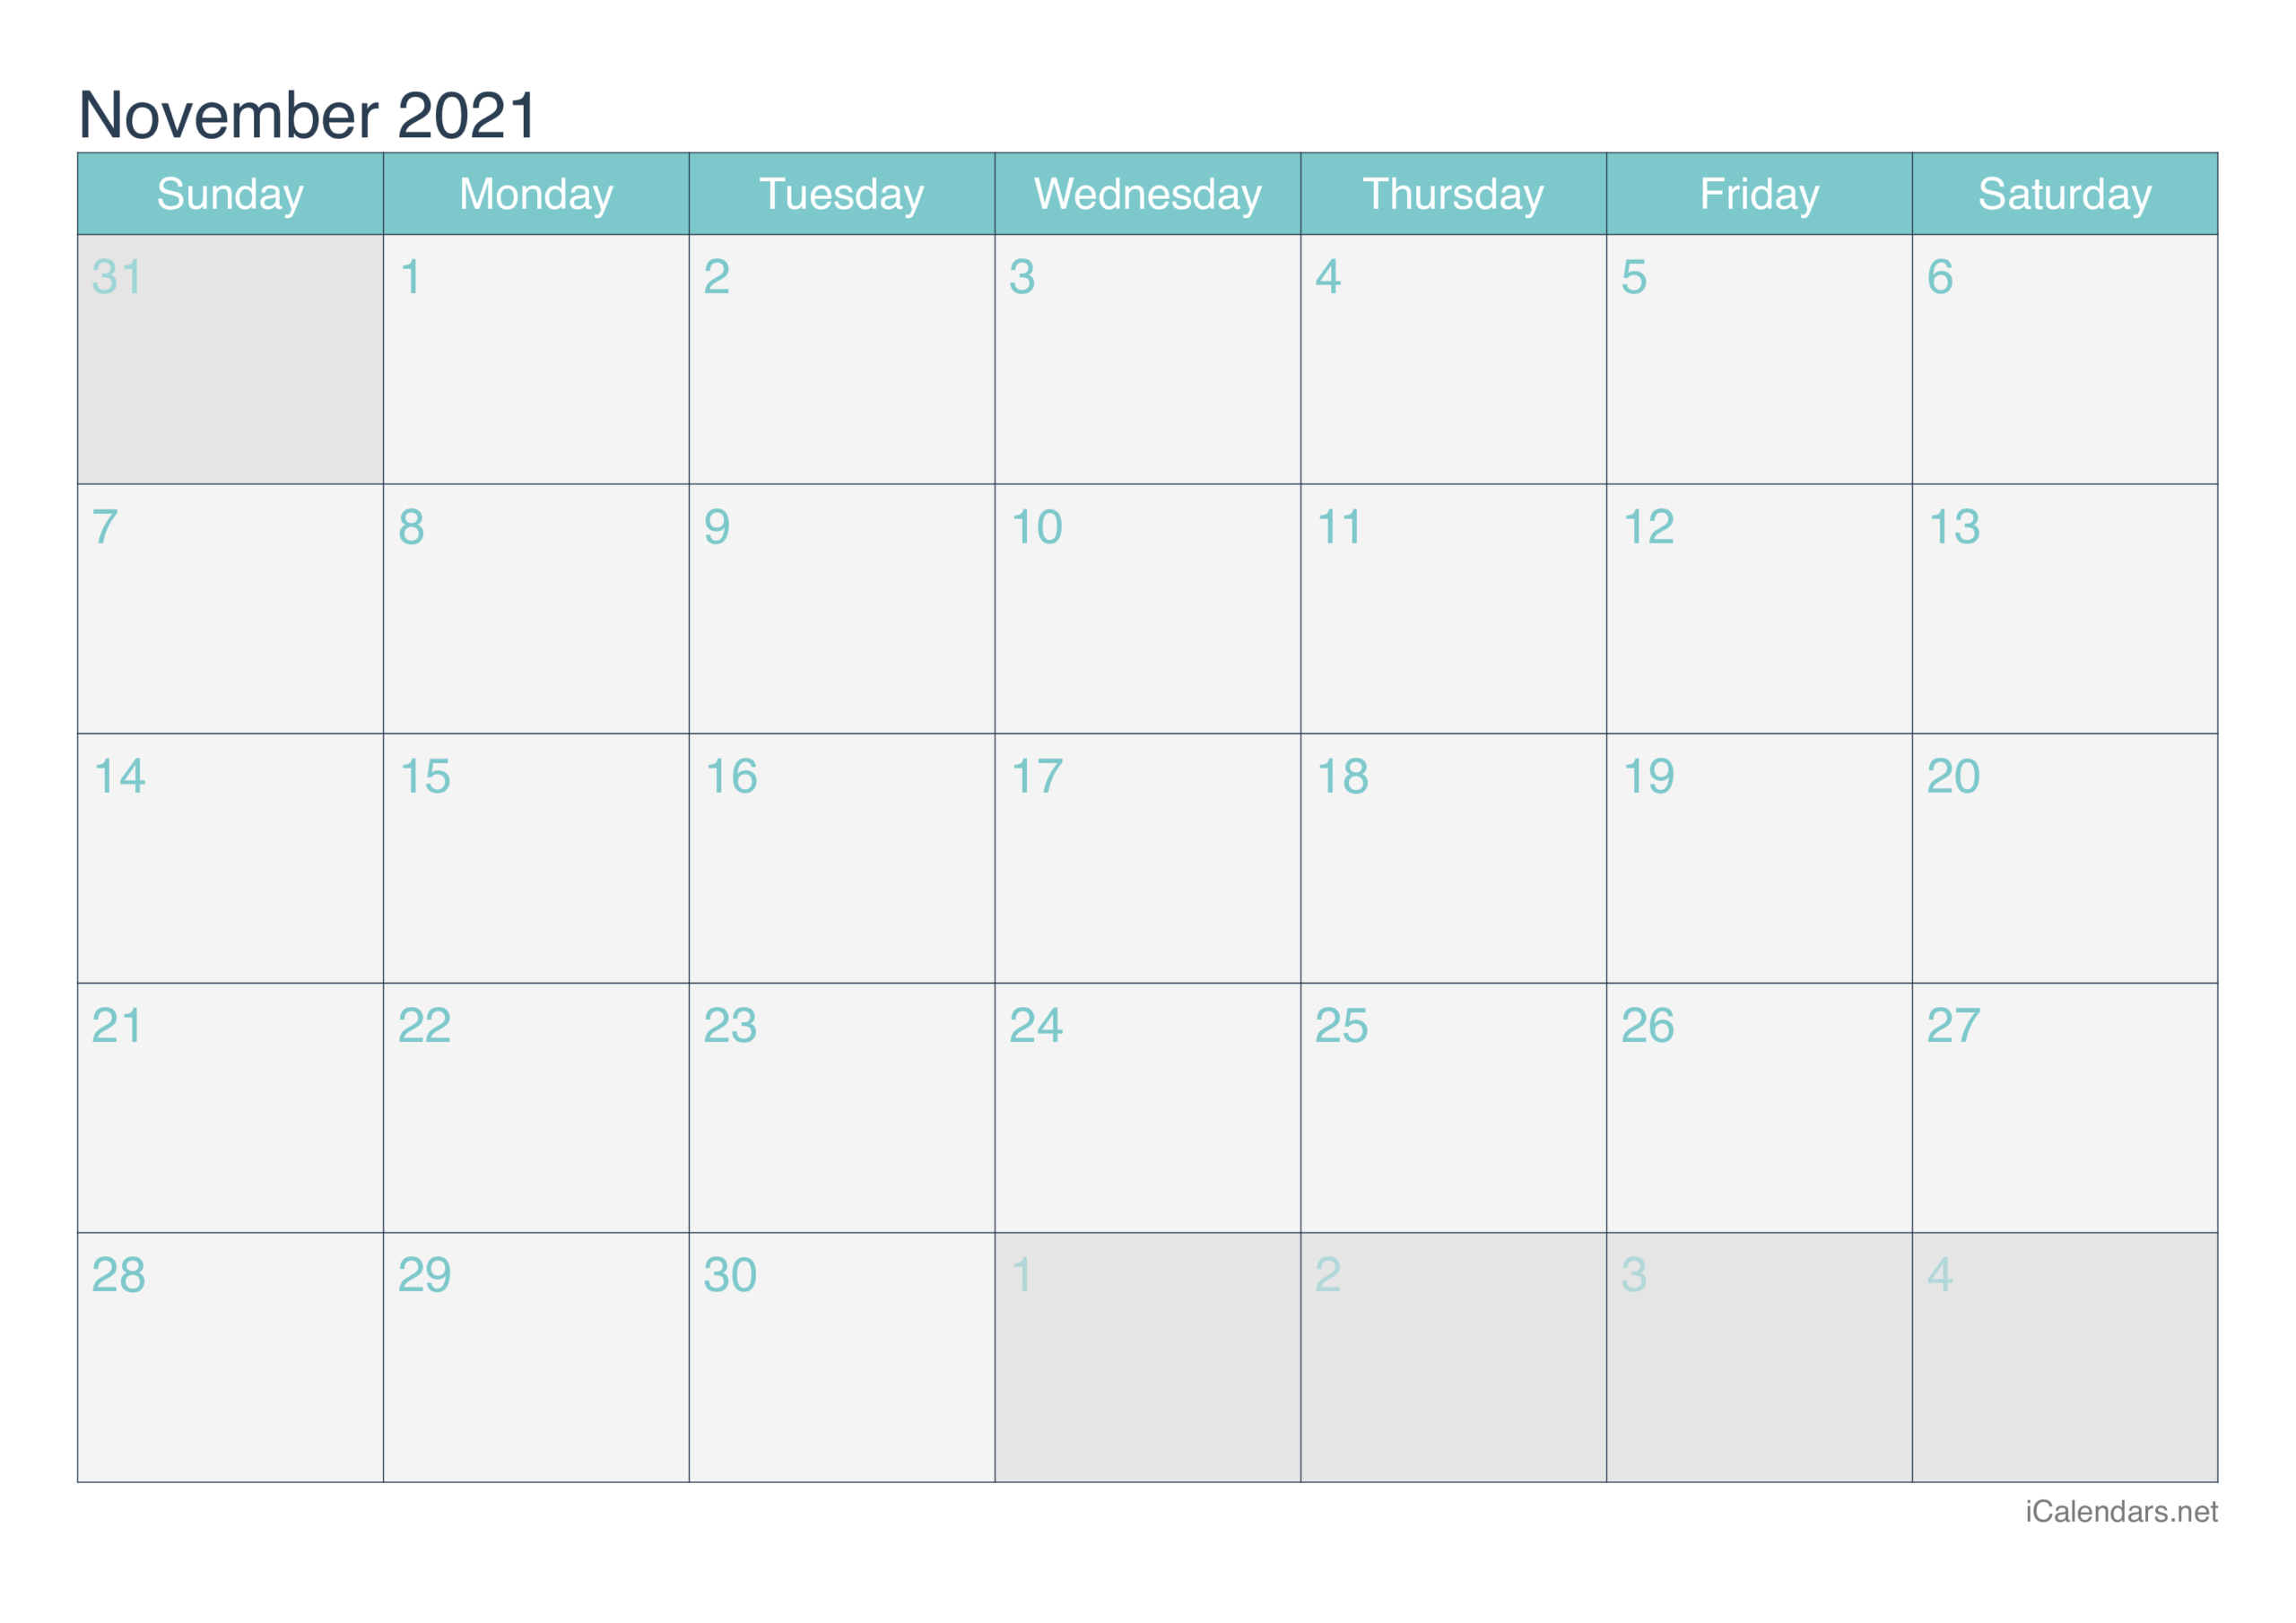 November 2021 Printable Calendar - Icalendars